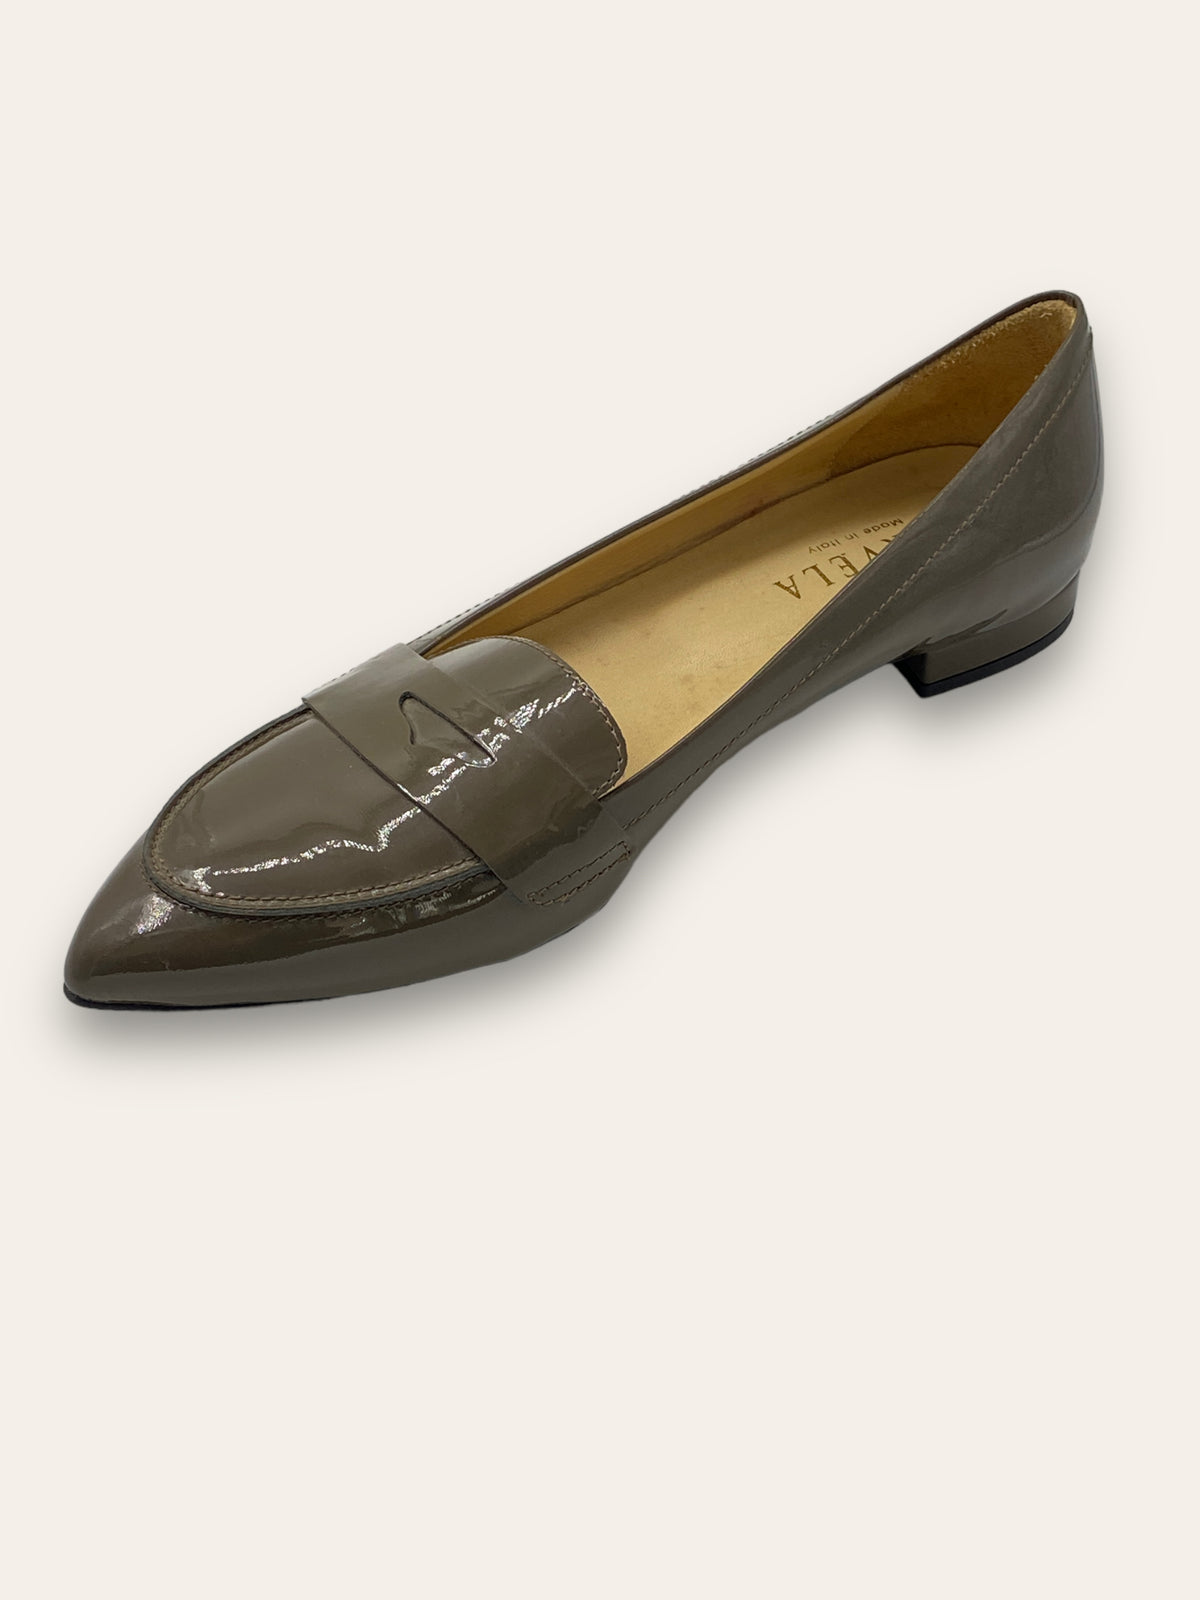 CARVELA khaki pointy patent leather shoes 5